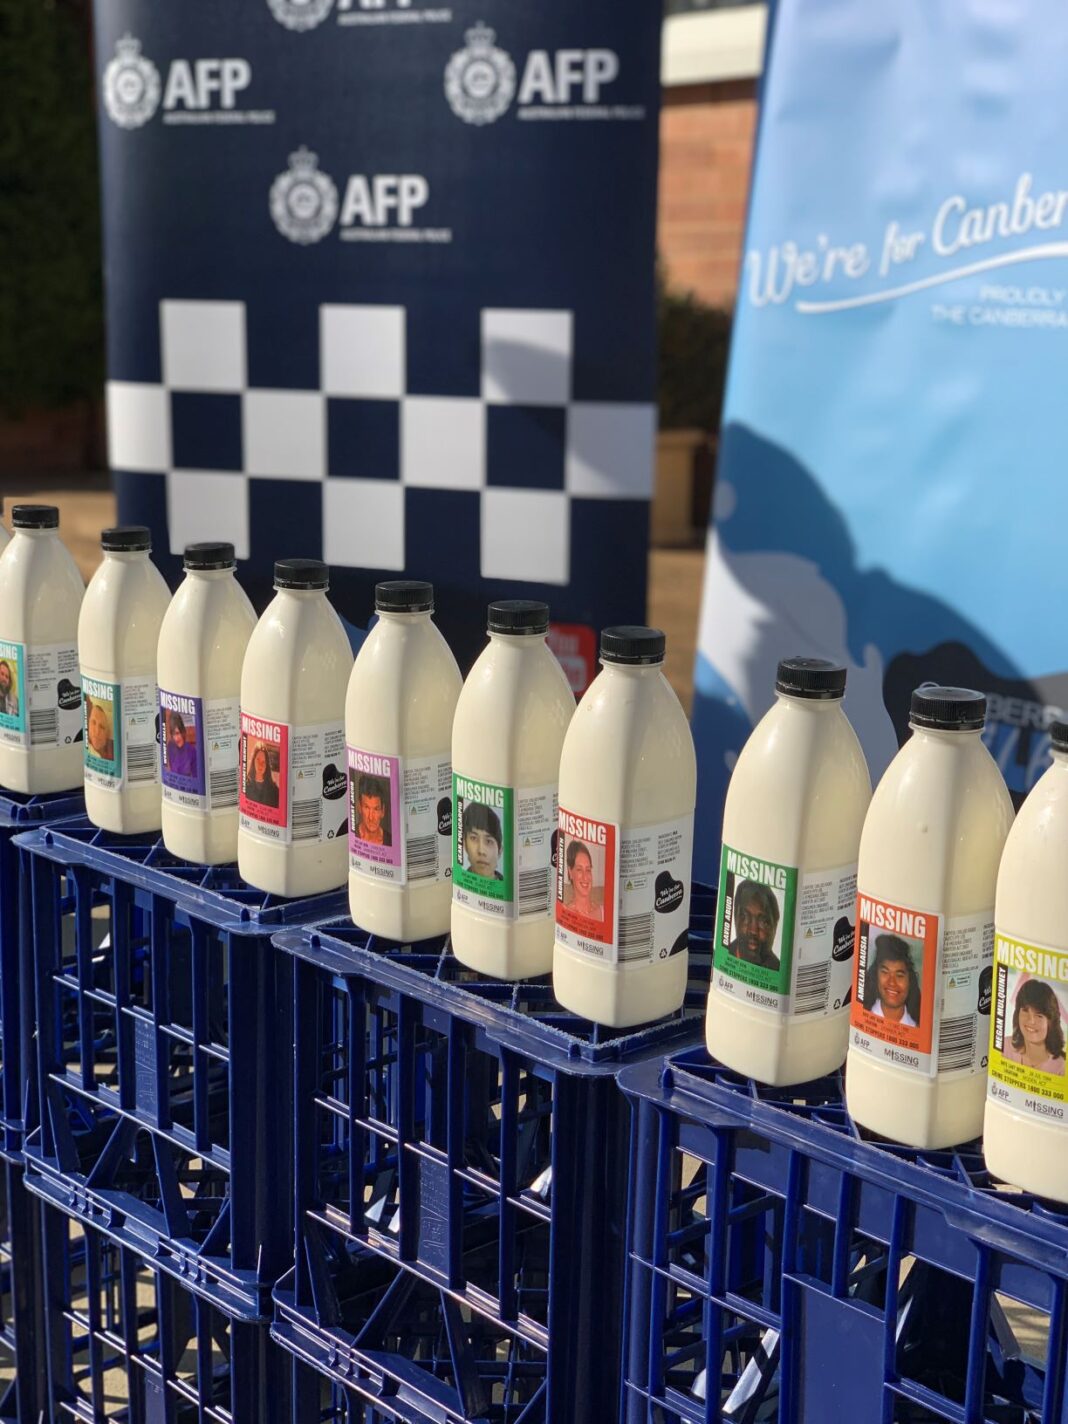 missing peoples faces on bottles of milk